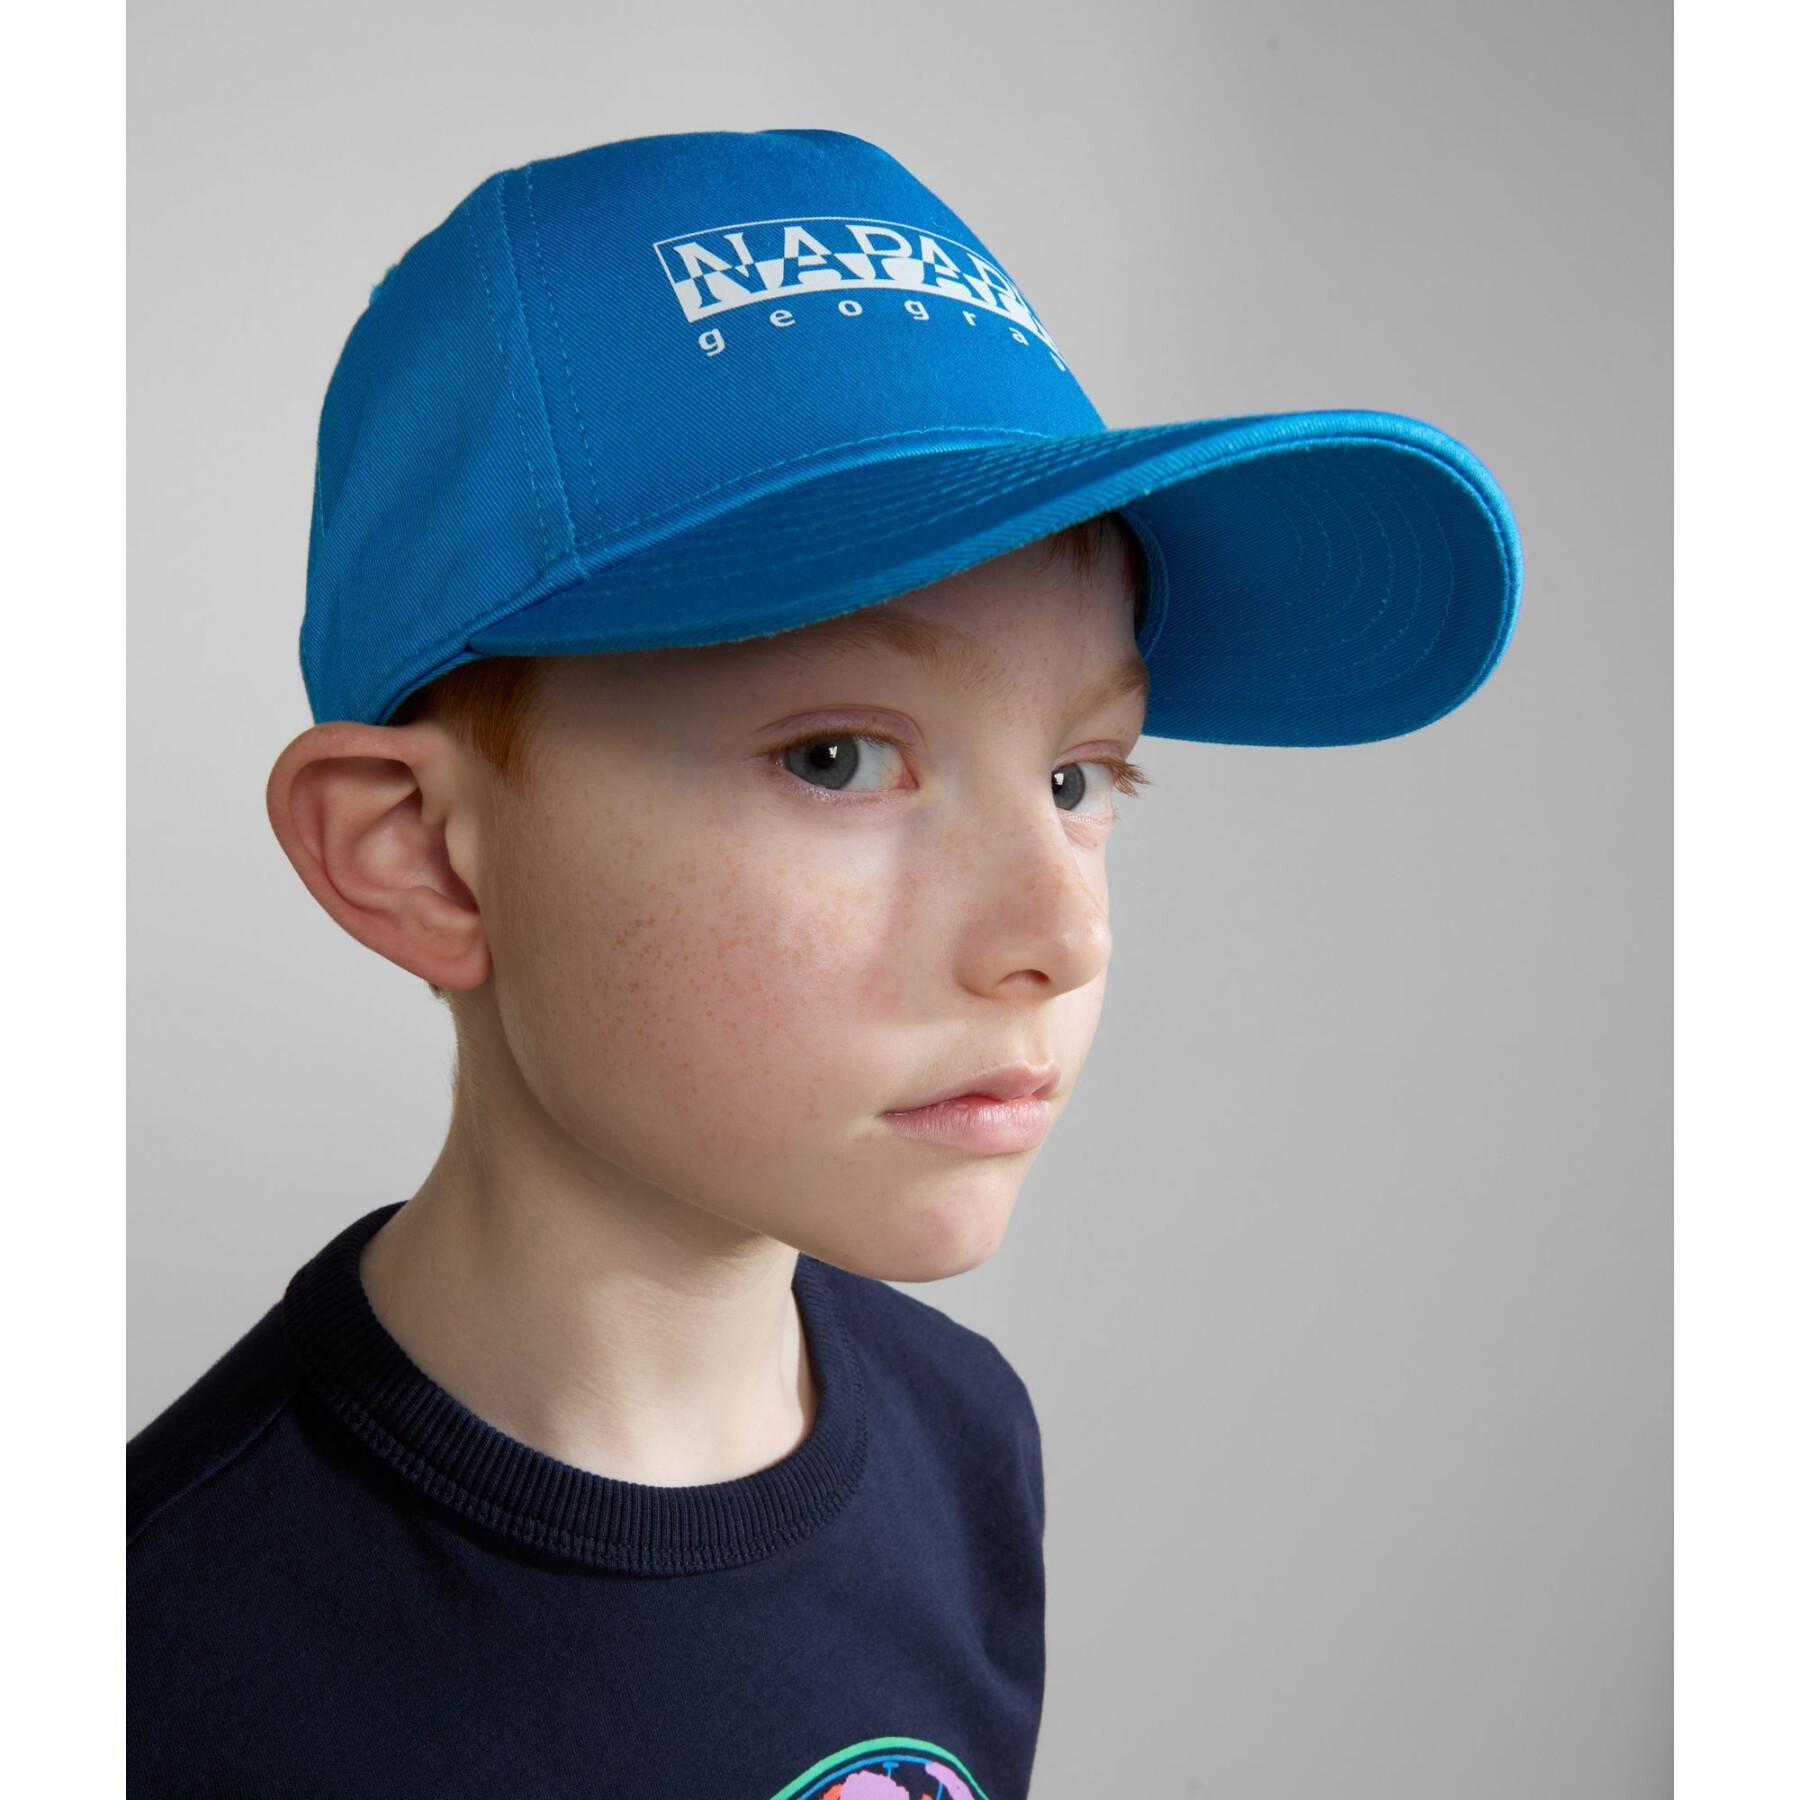 Cappellino per bambini Napapijri Flaming